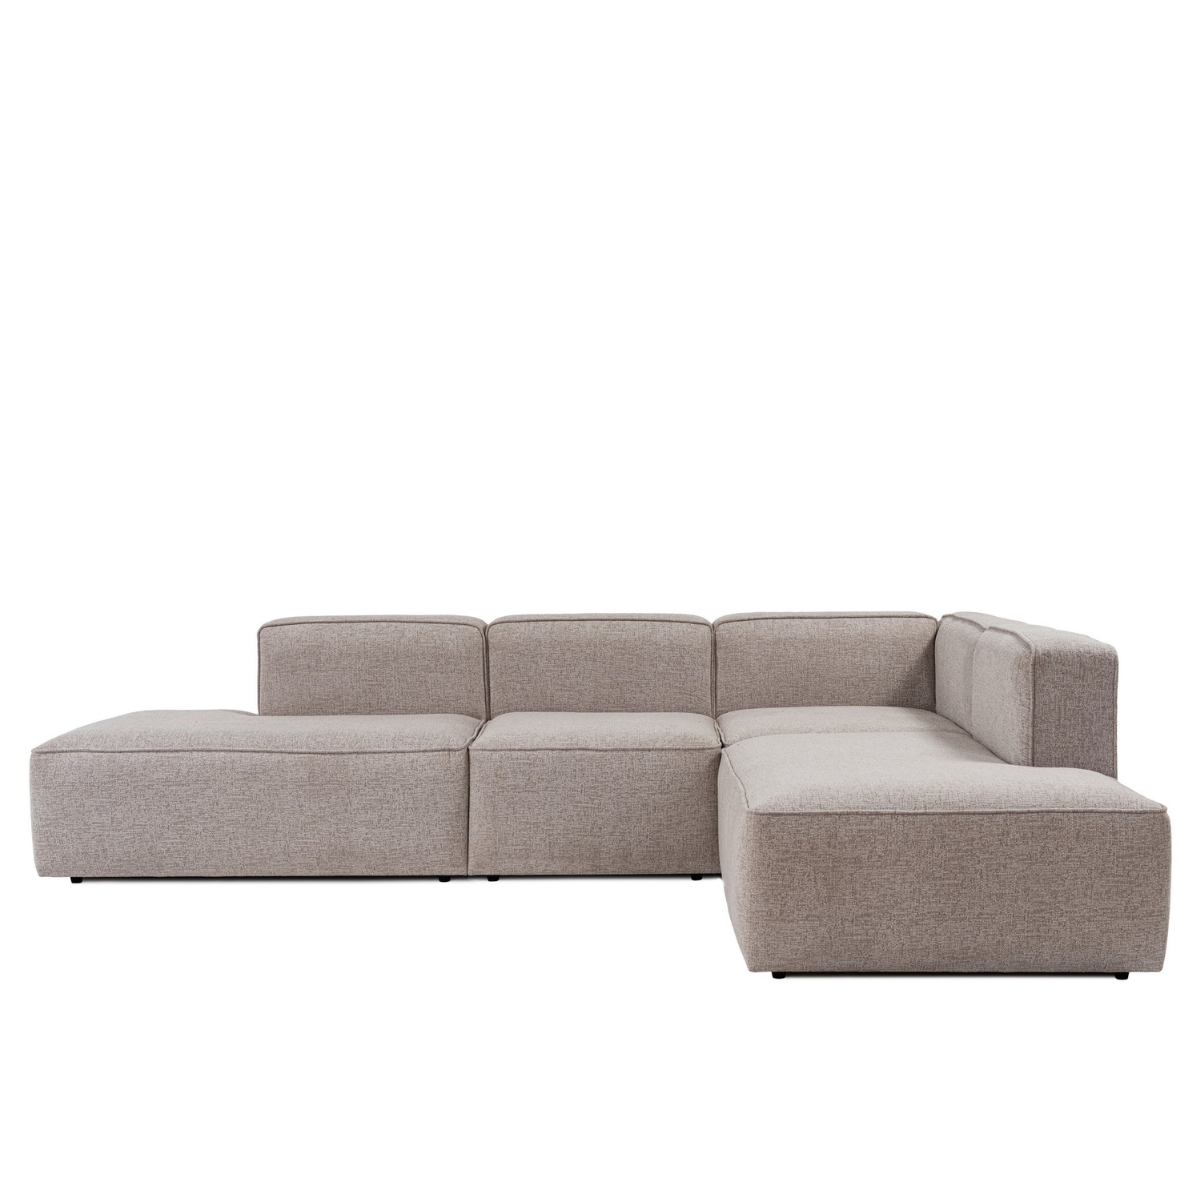 MATT Design | More sofa - 4 moduler, double open end